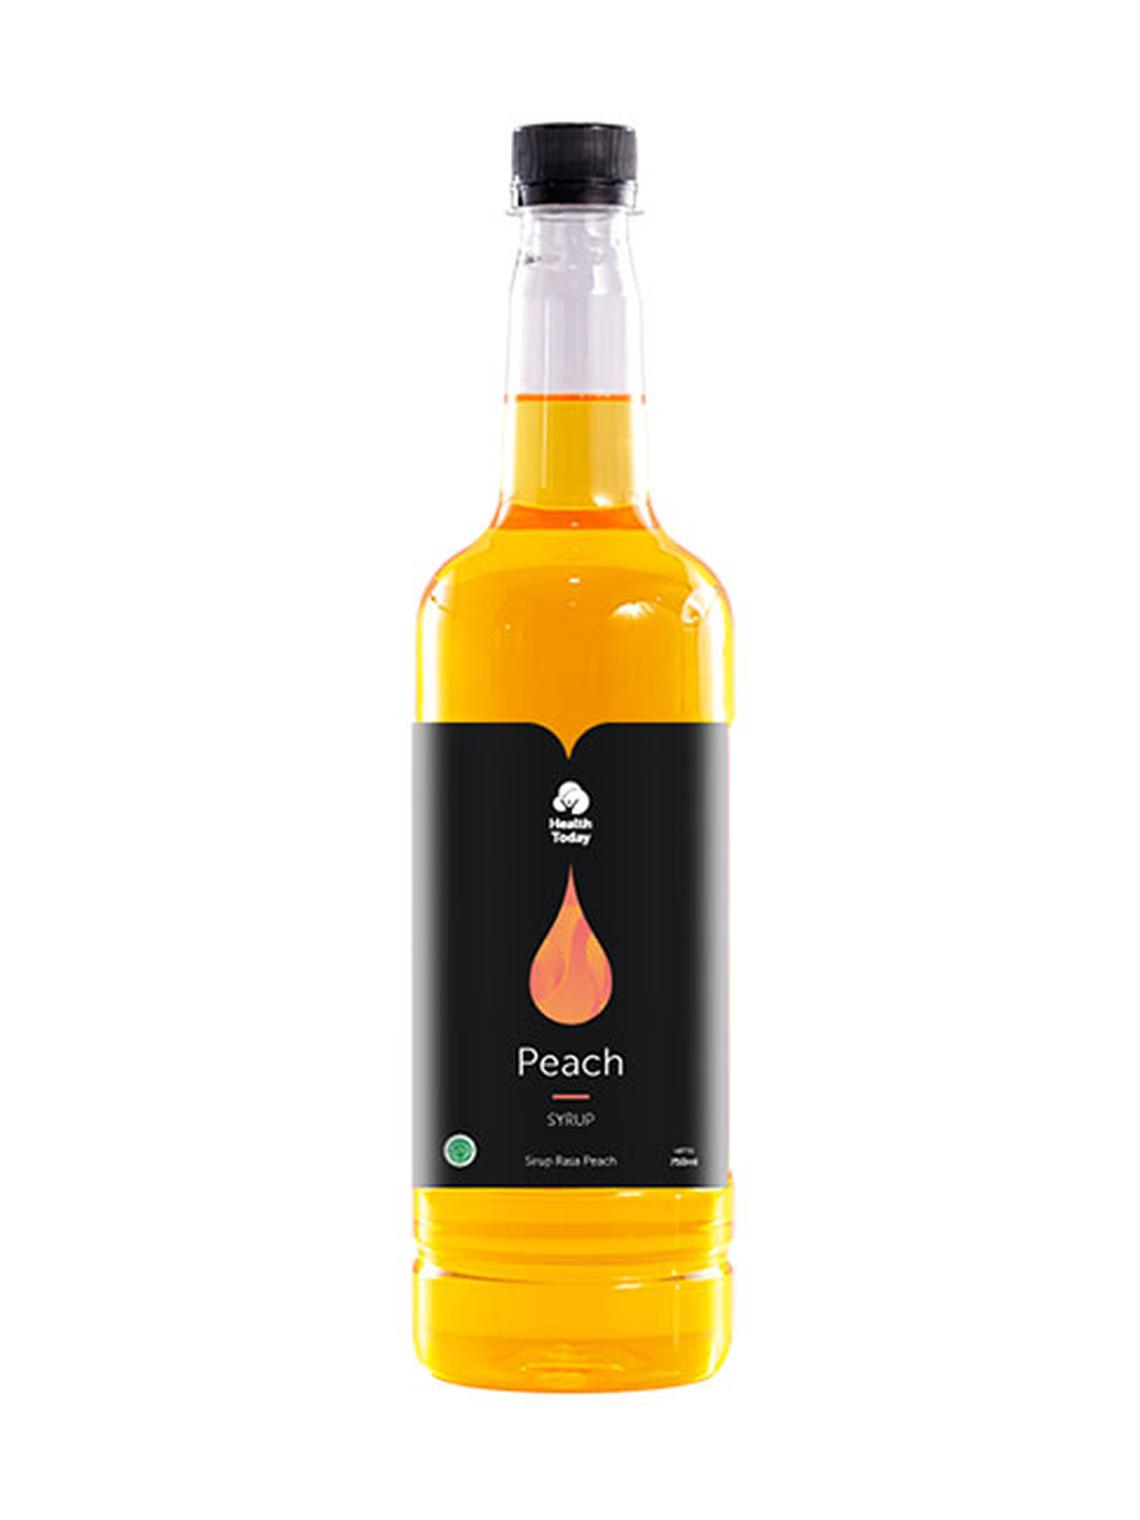 Health Today Syrup Peach 750 ml